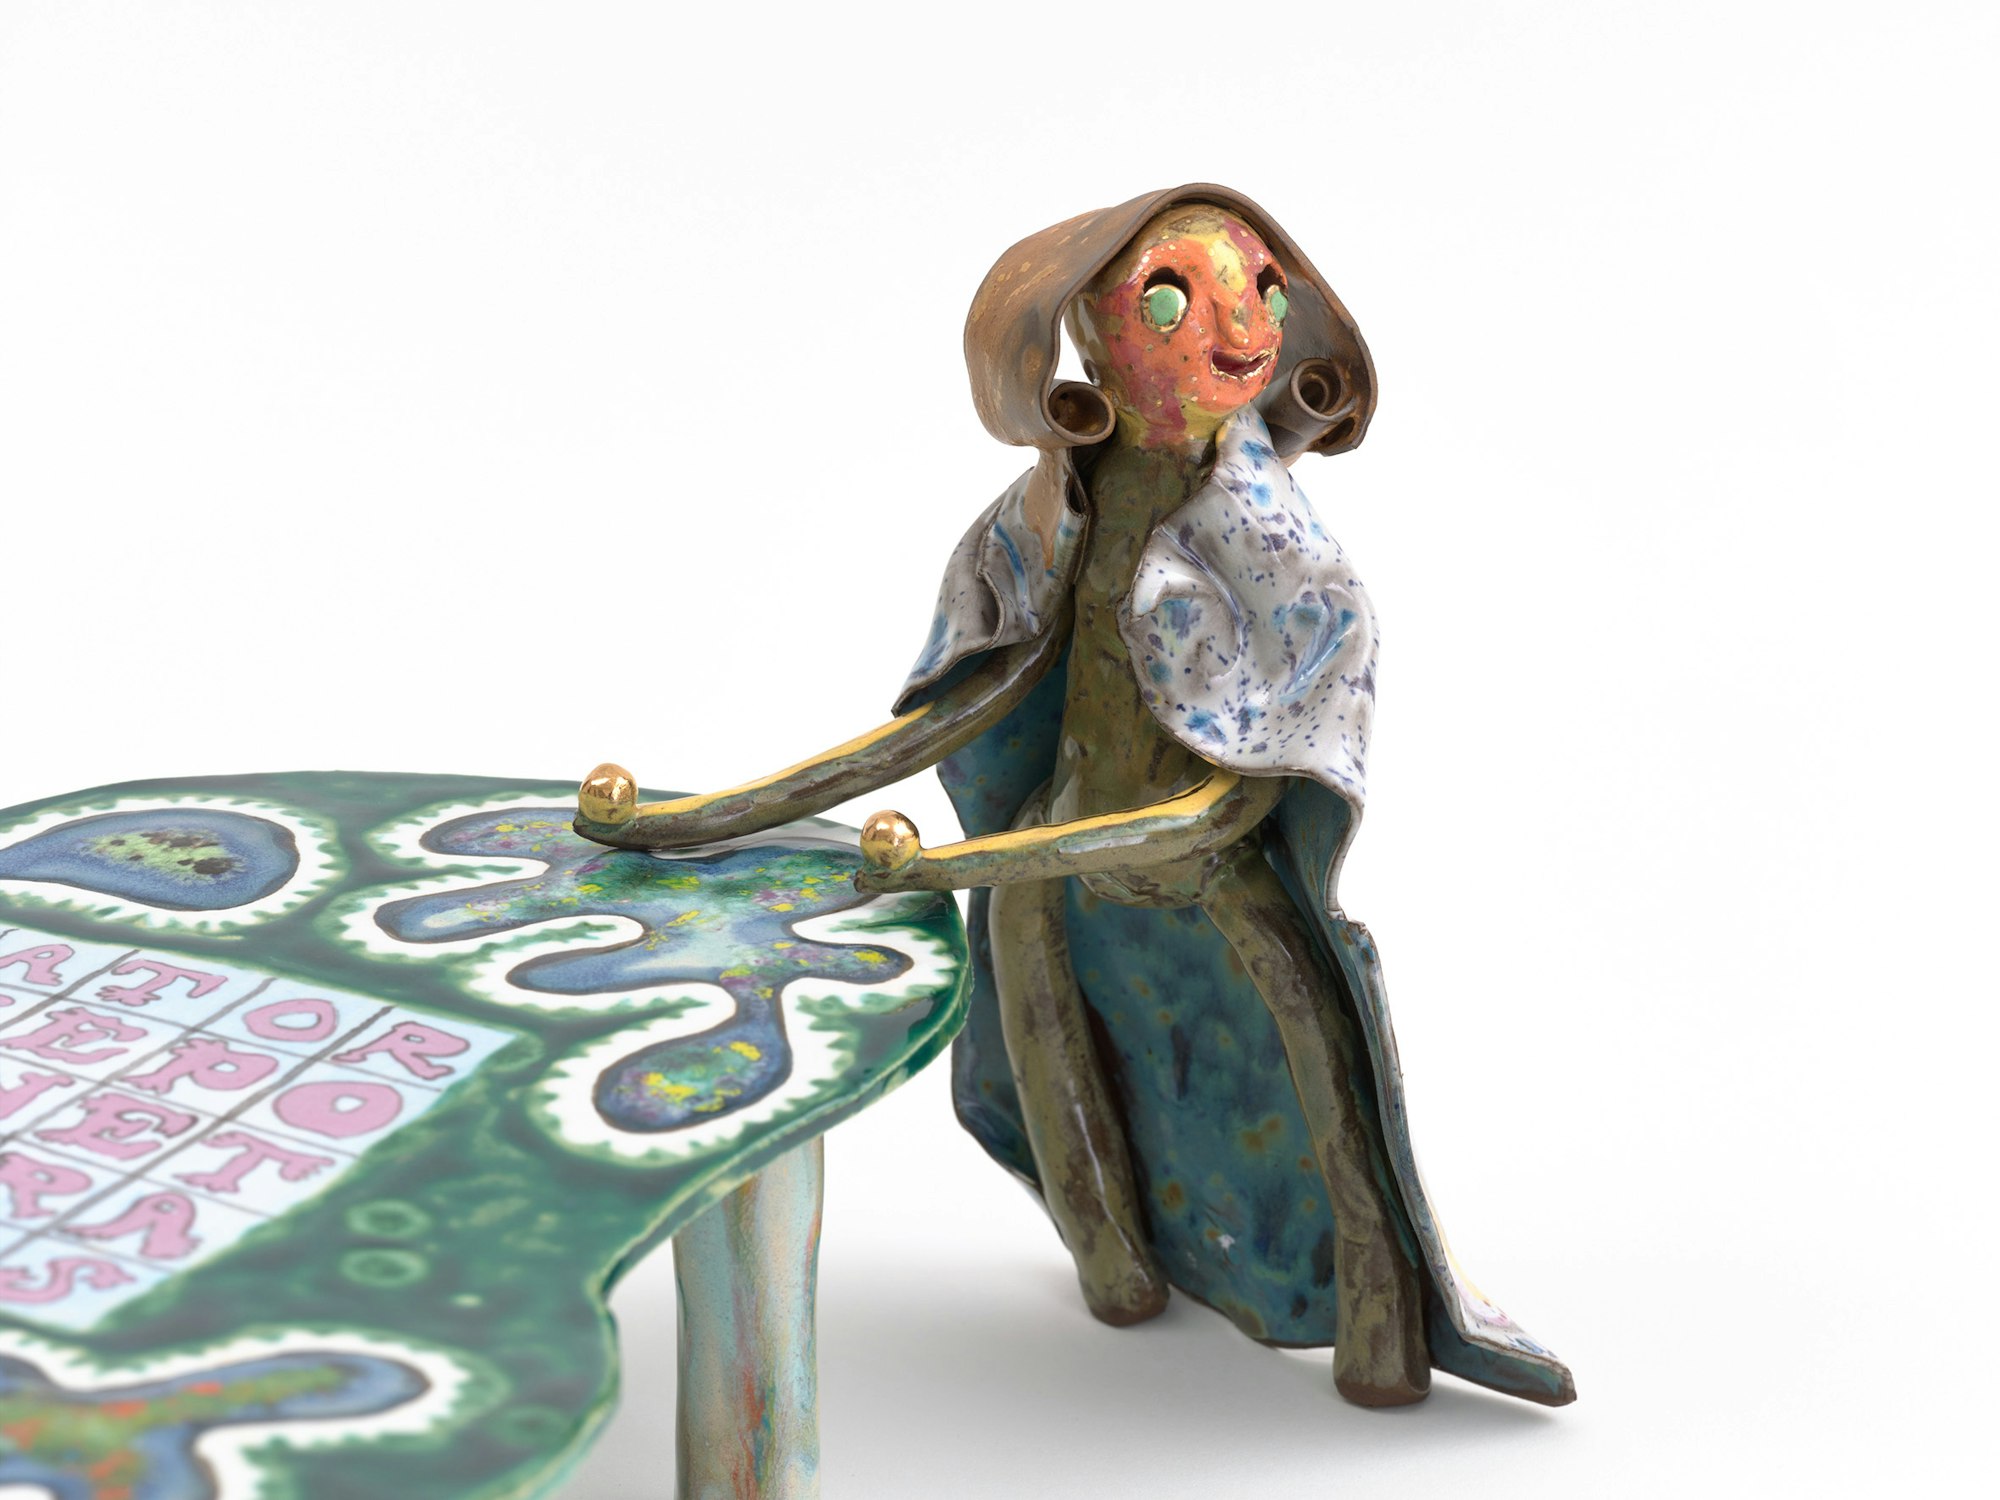 A ceramic figure leans on a ceramic table